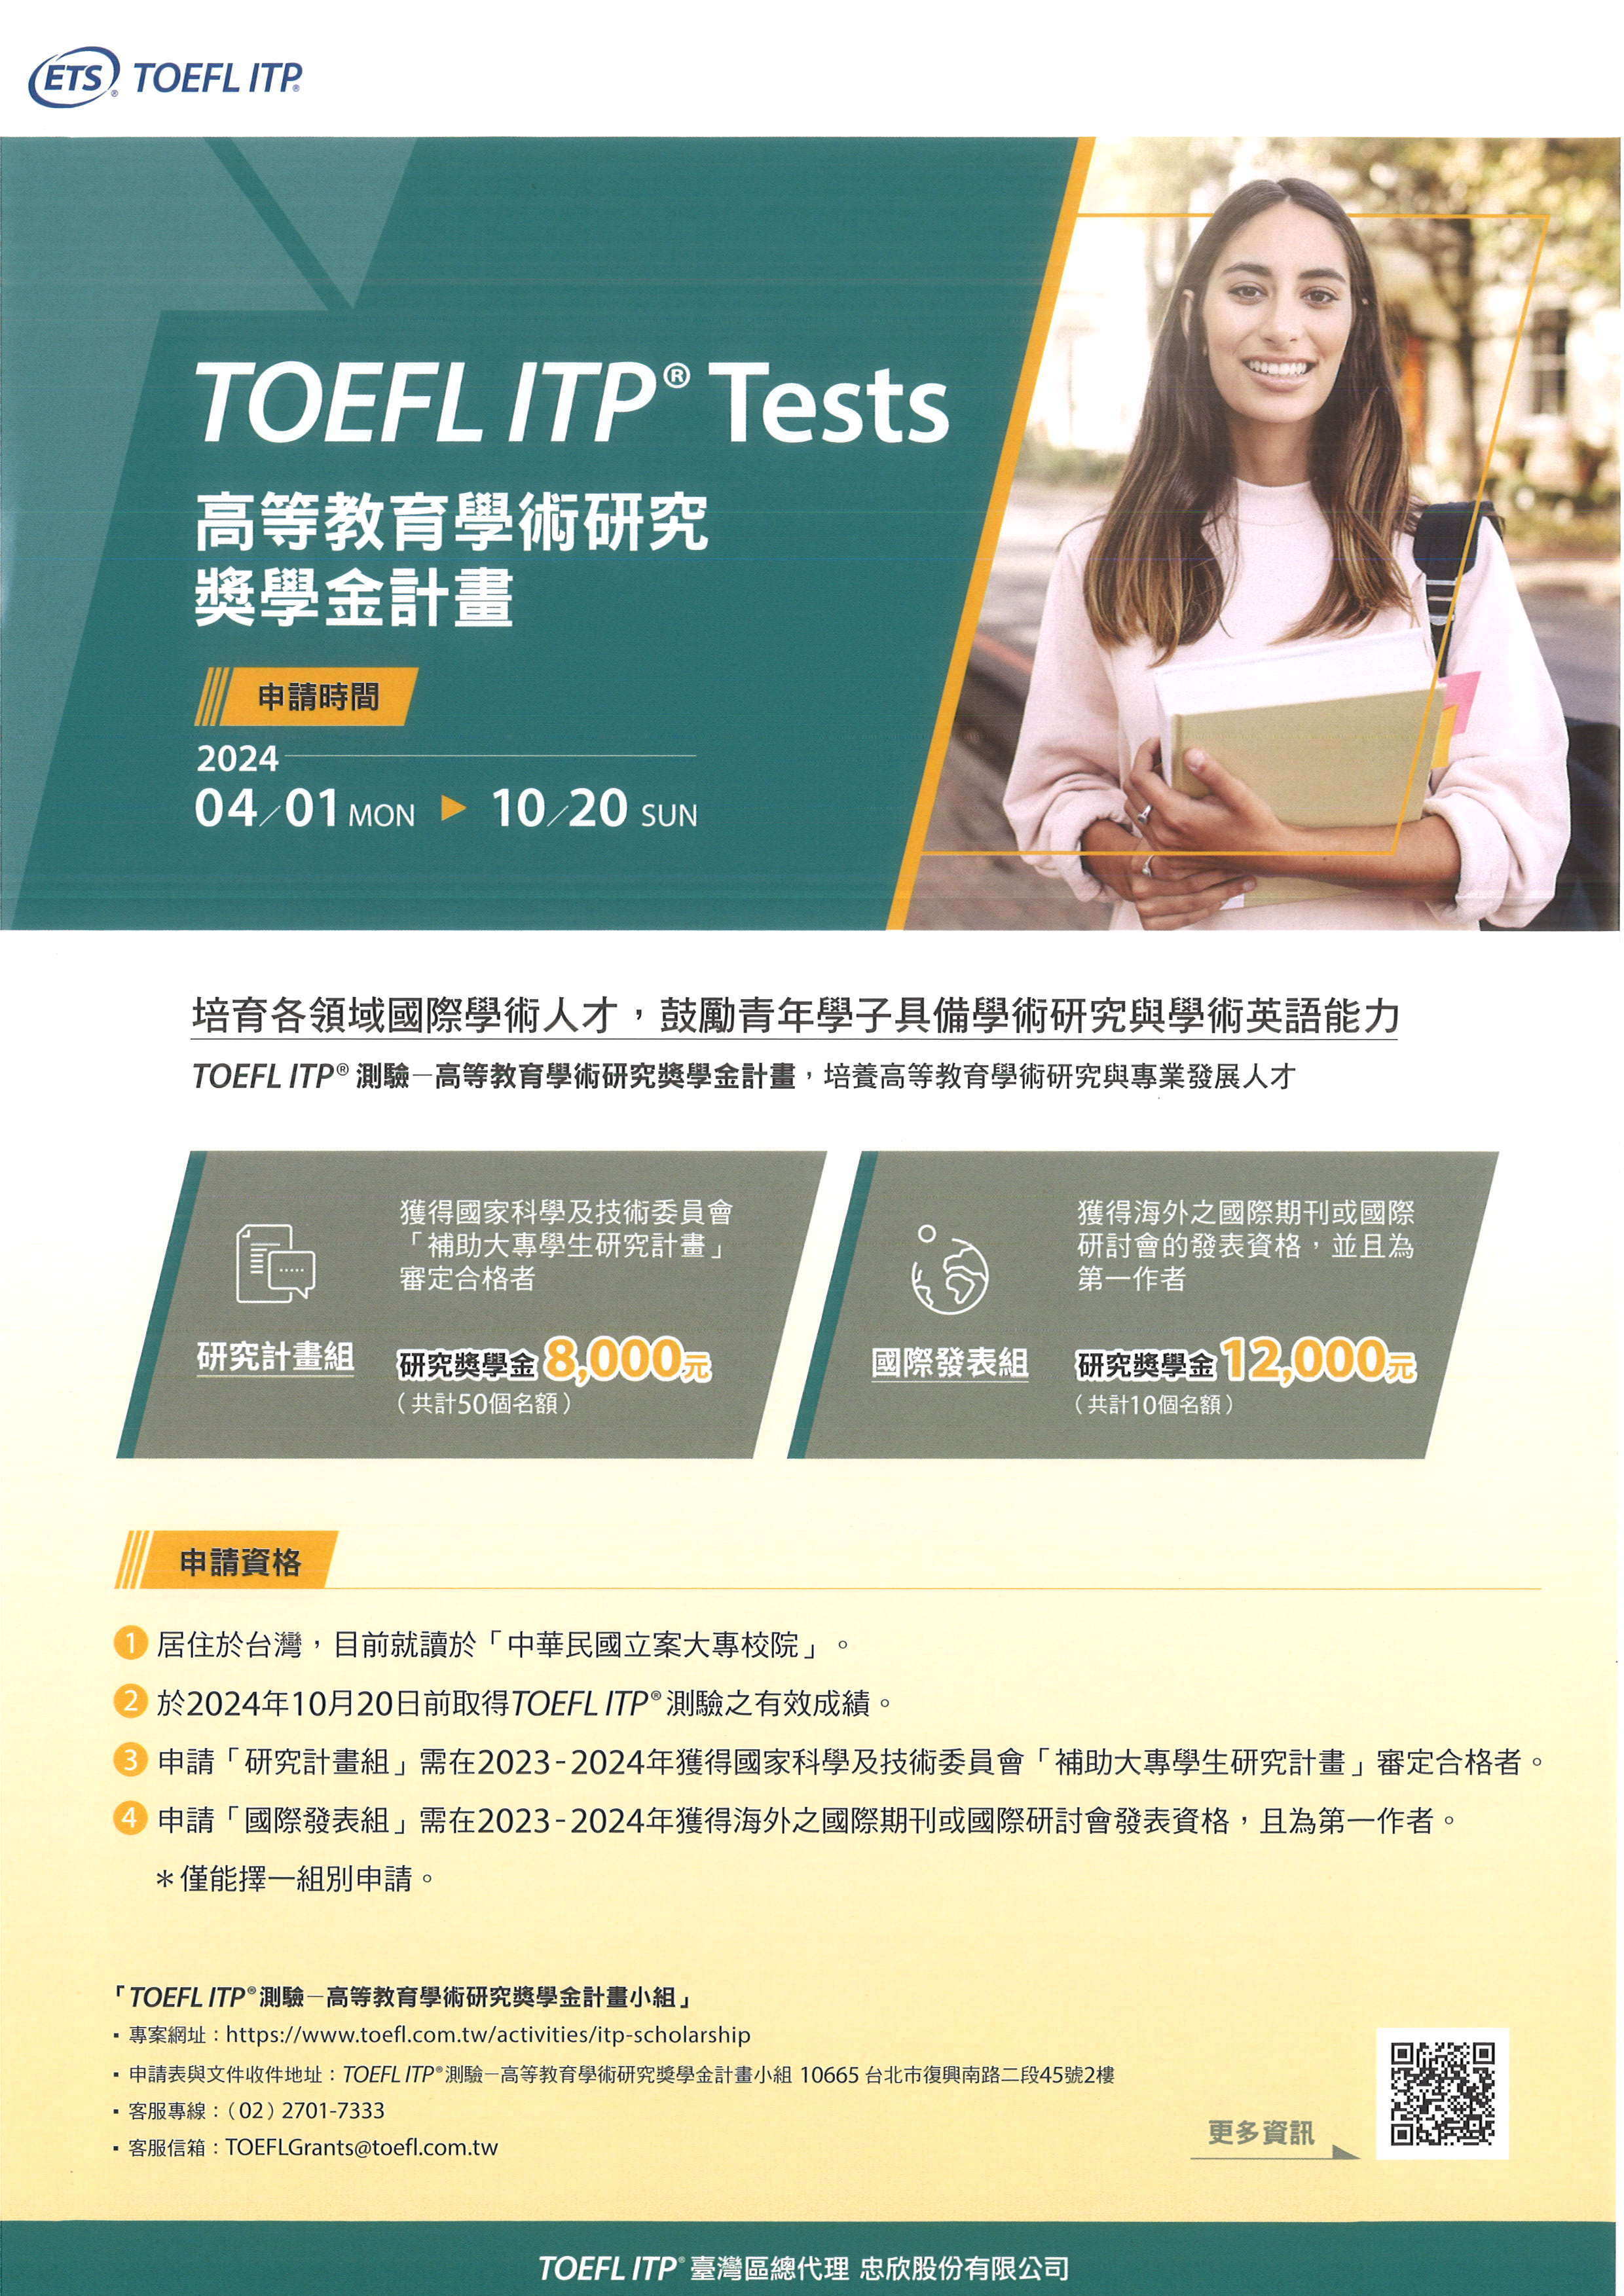 TOEFLITP測驗-高等教育學術研究獎學金計畫 EDM